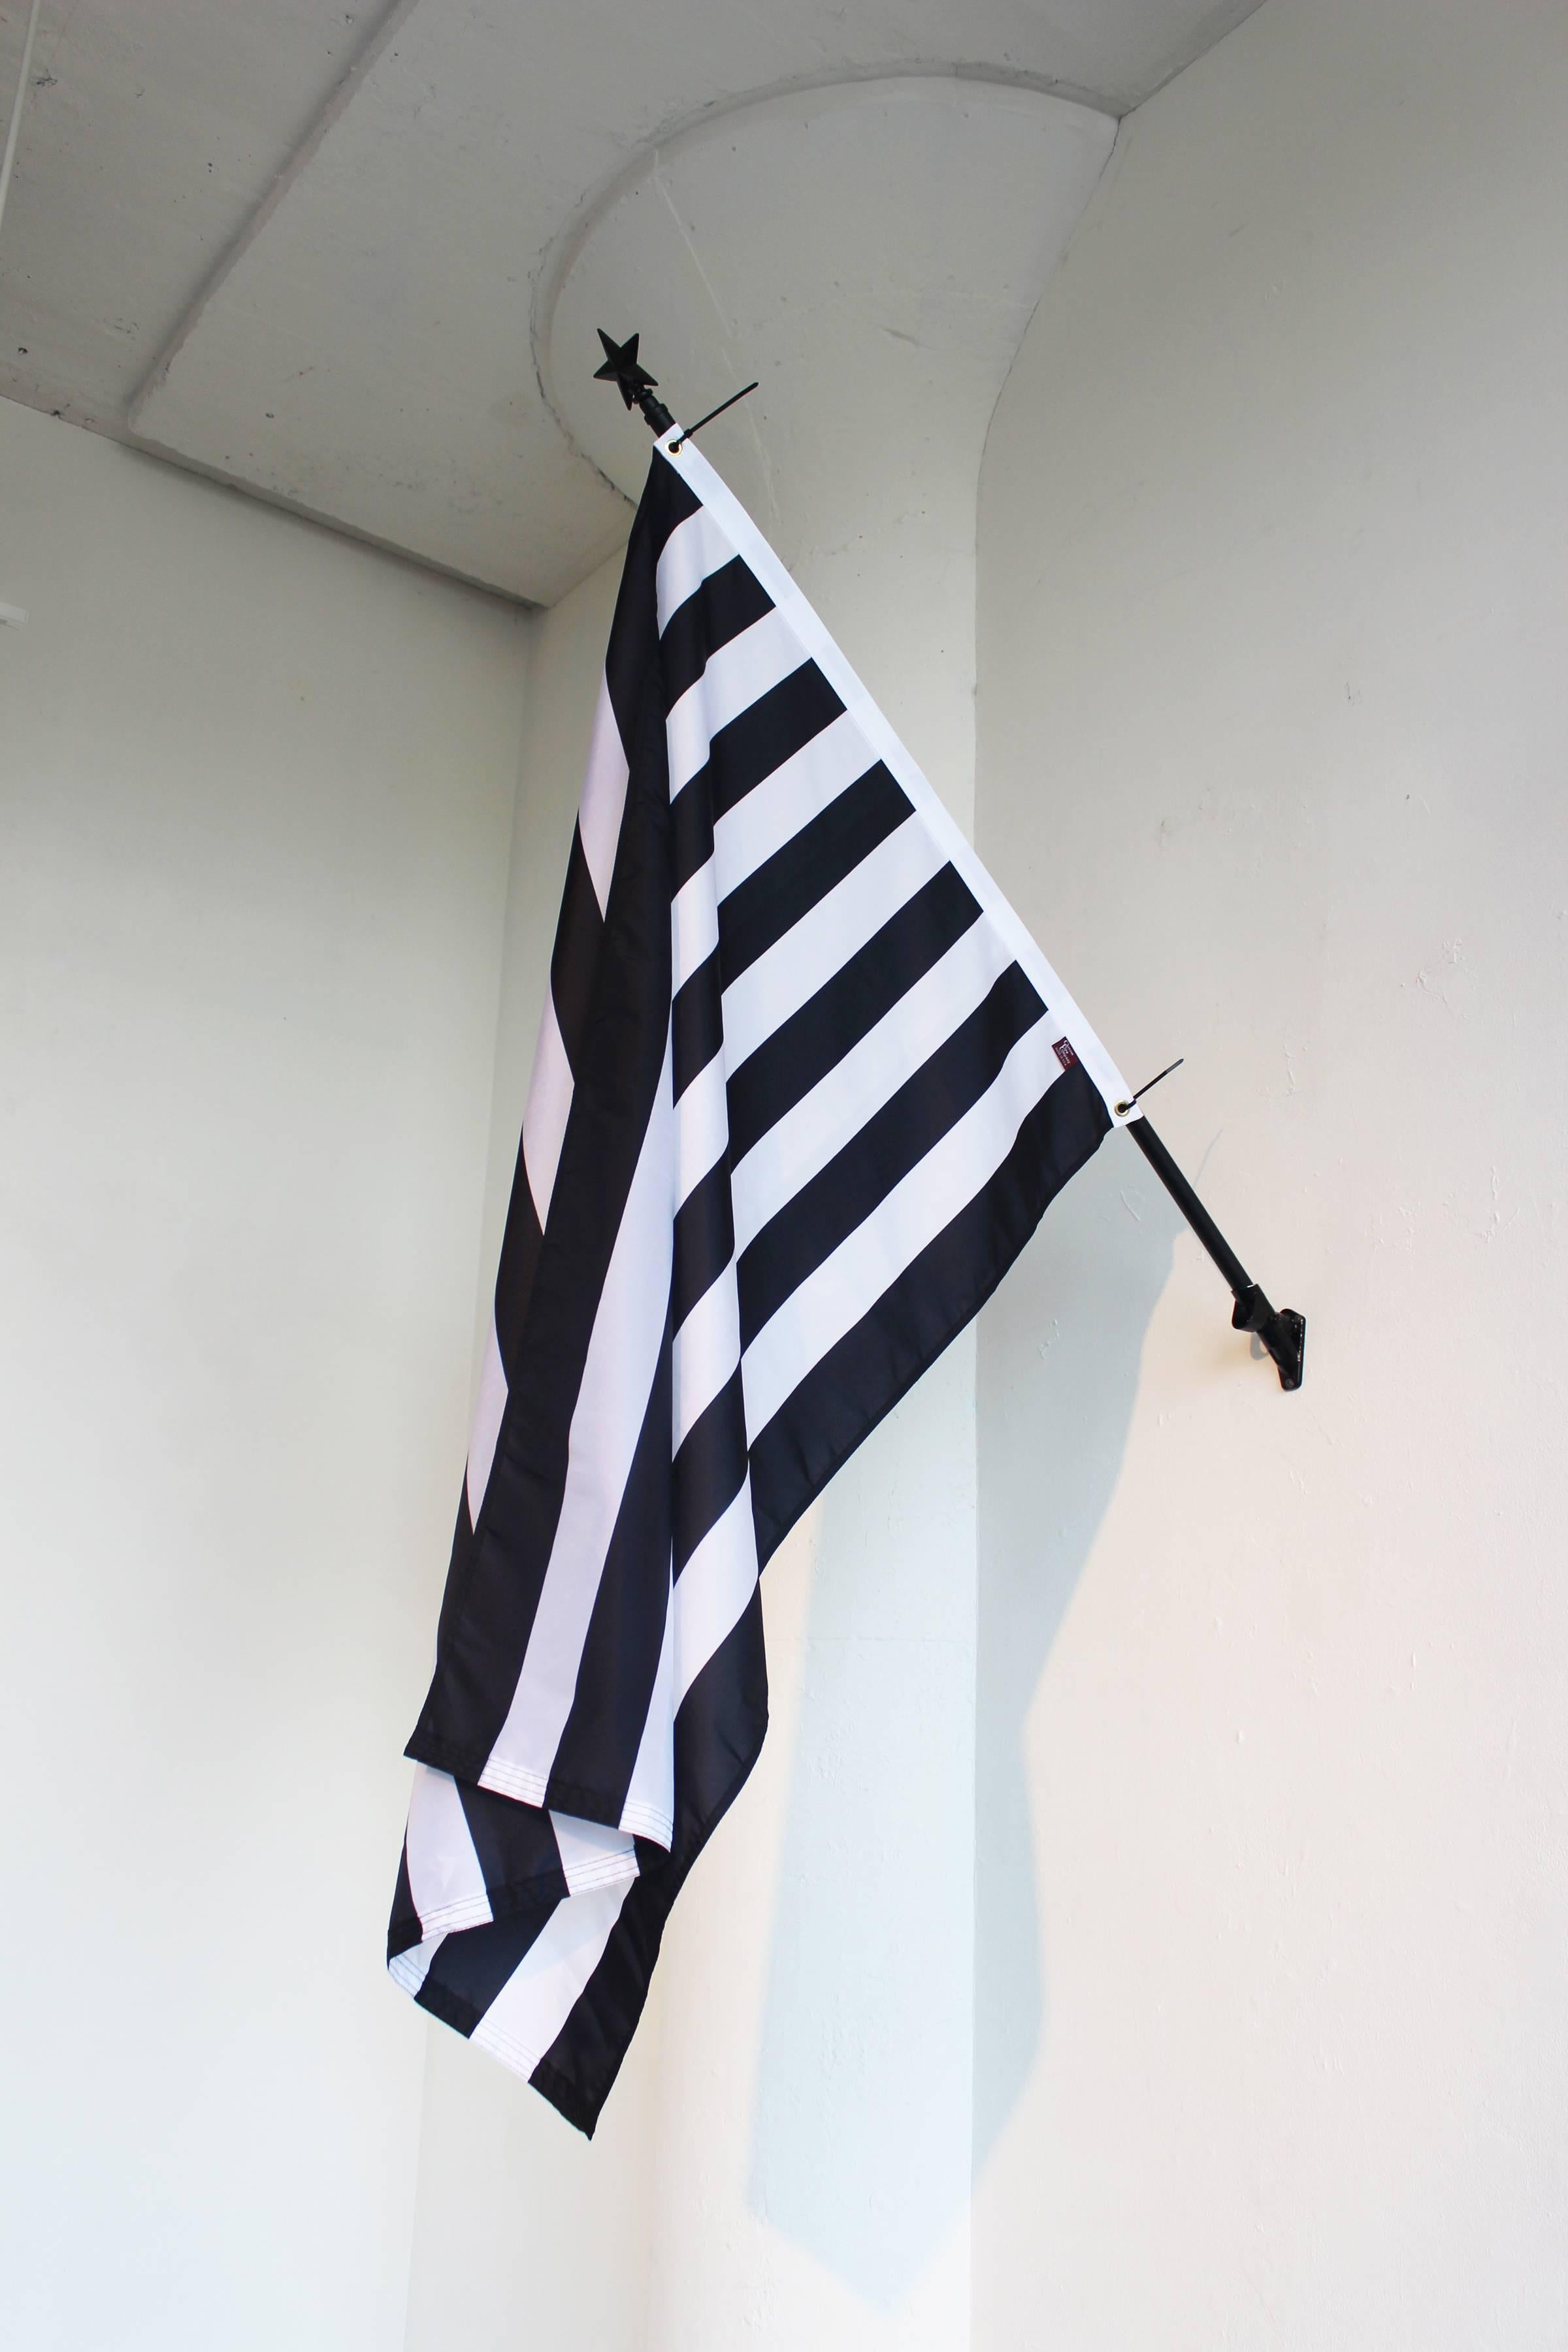 Bars and Stripes, 2017, Nylon flag, Aluminum flag pole - Sculpture by David Borawski